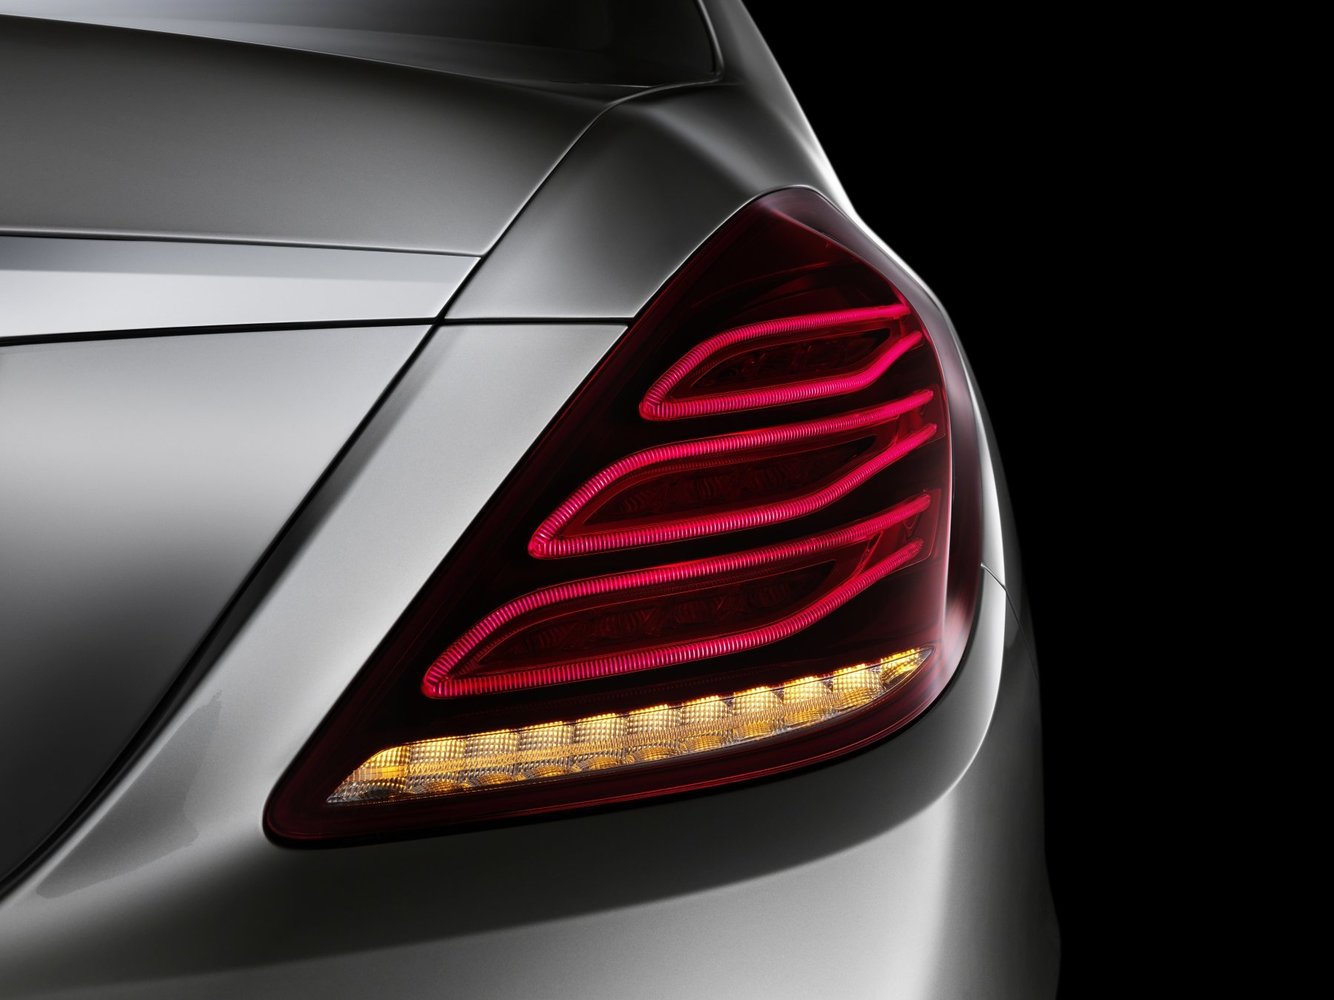 седан Mercedes-Benz S-klasse 2013 - 2016г выпуска модификация 2.1 AT (204 л.с.)